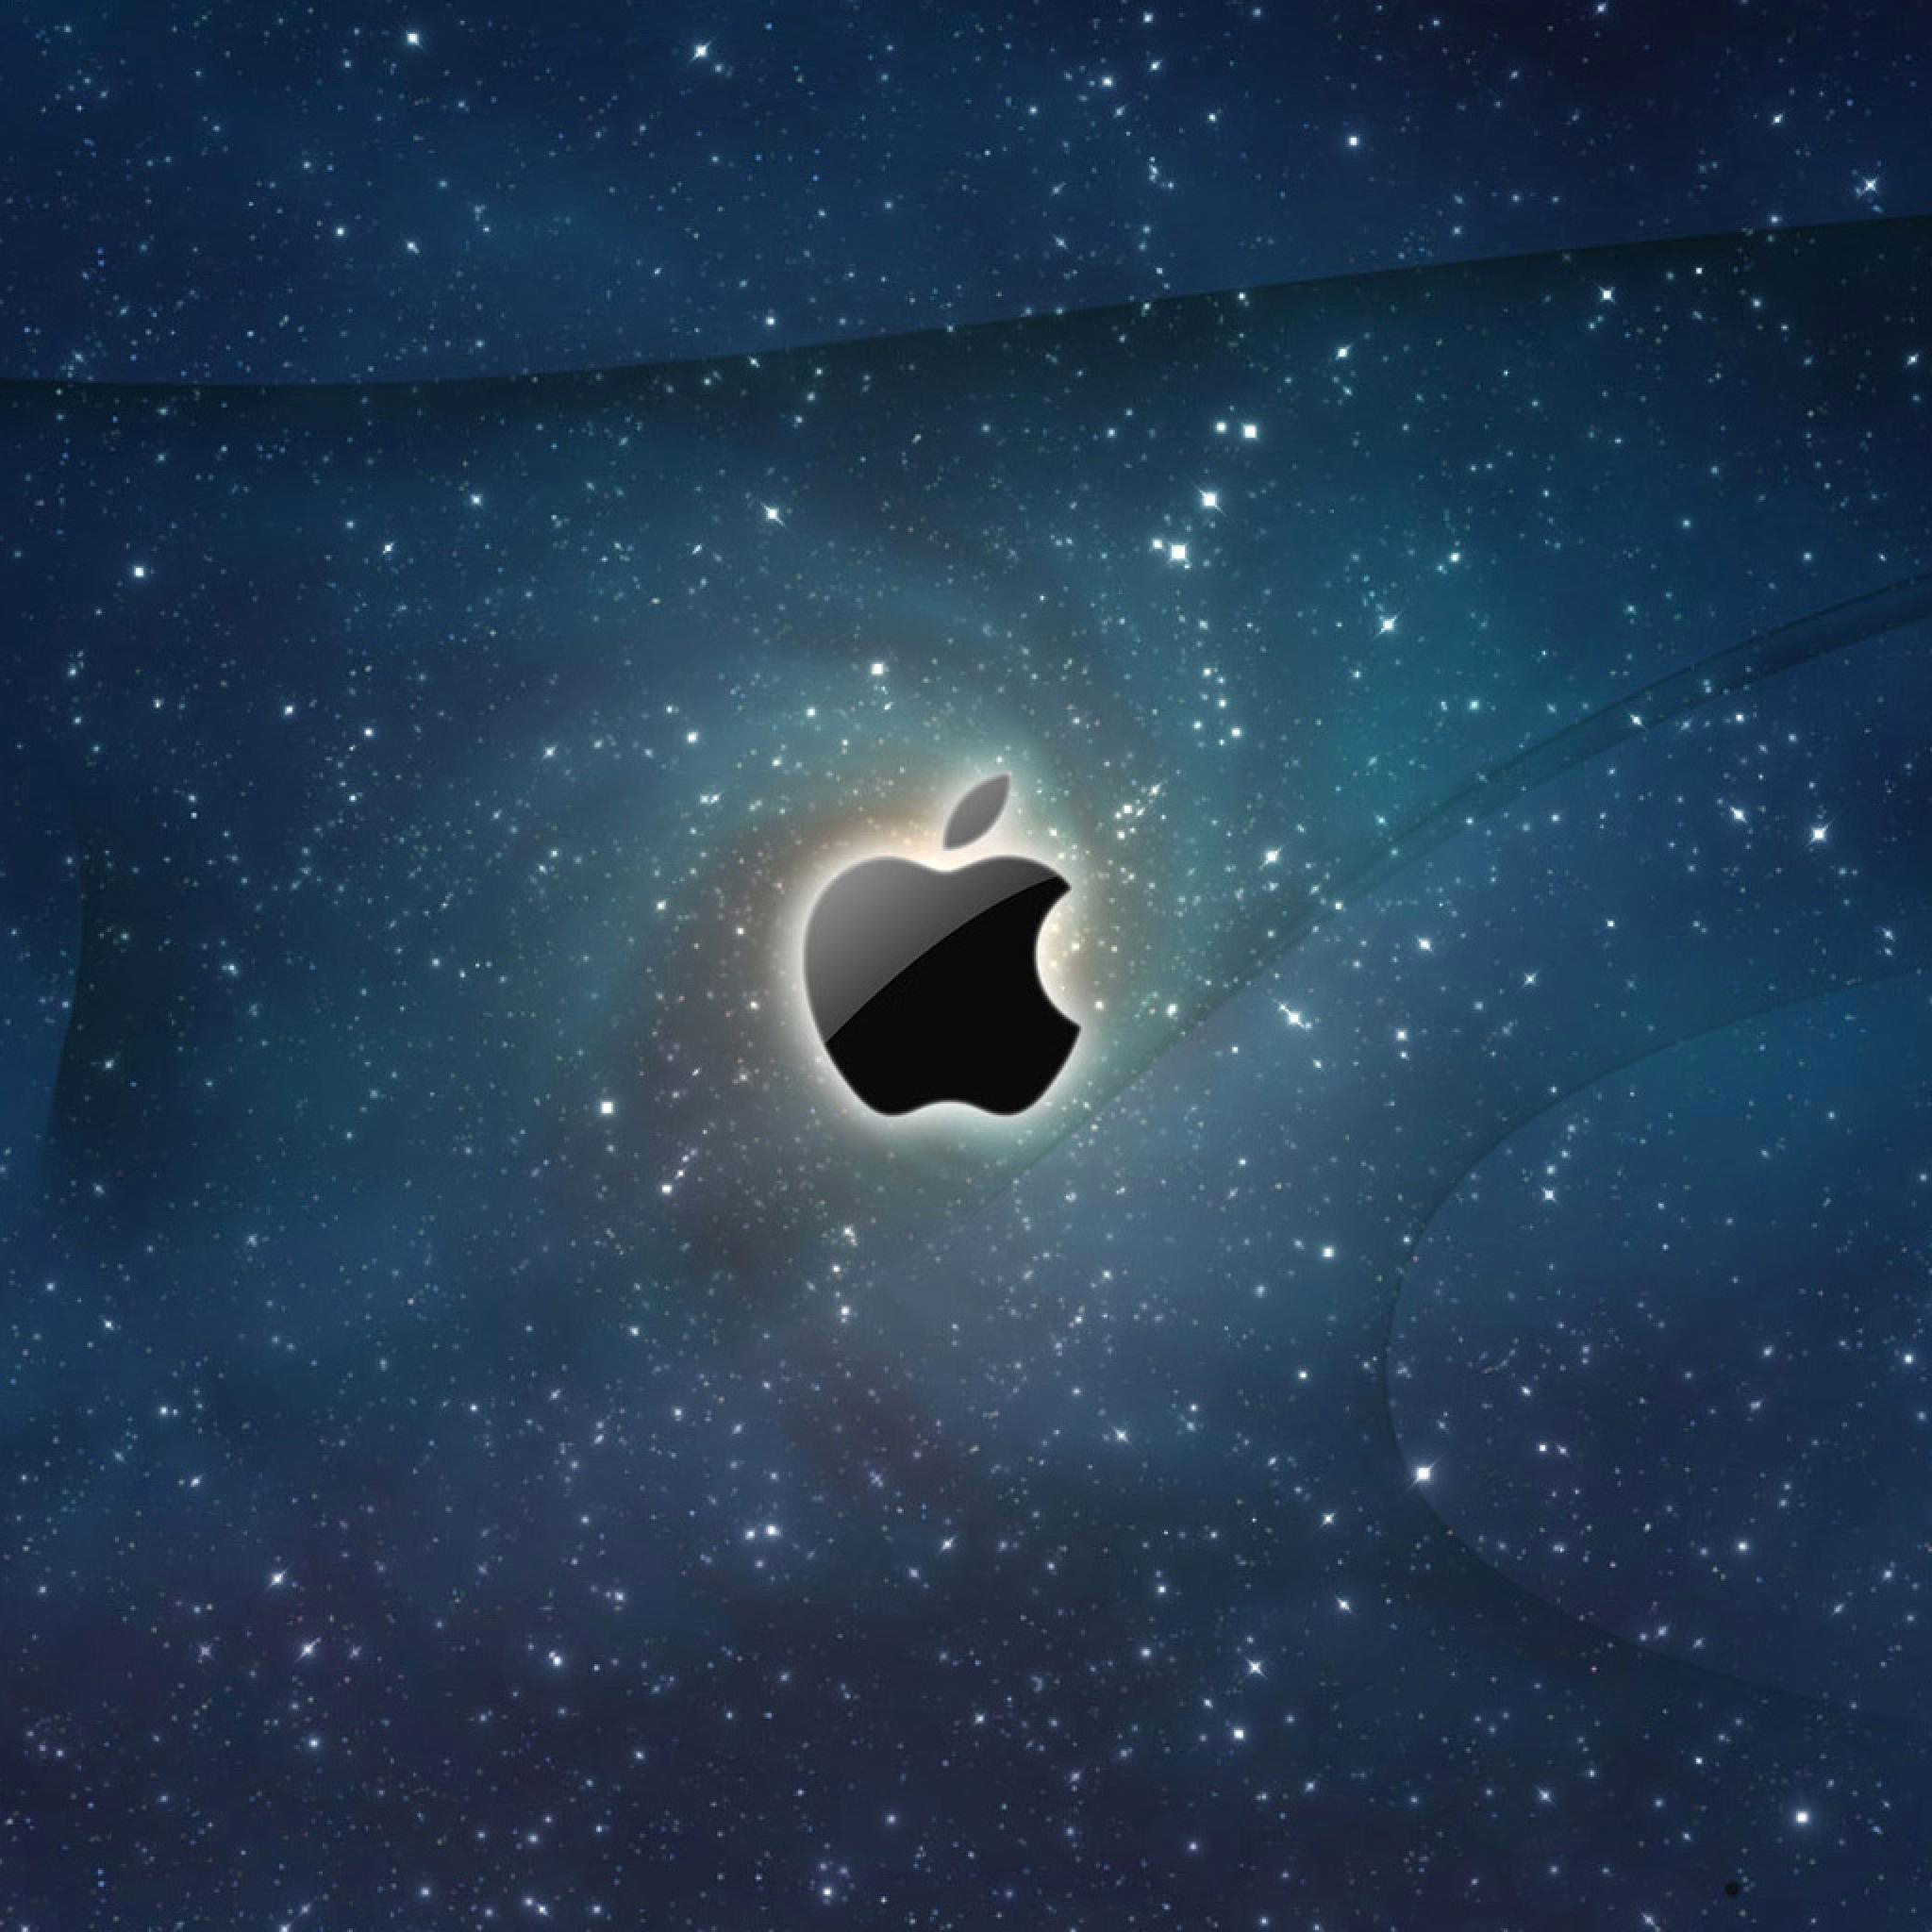 Apple Galaxy Retina Wallpaper for iPhone Pro Max, X, 6